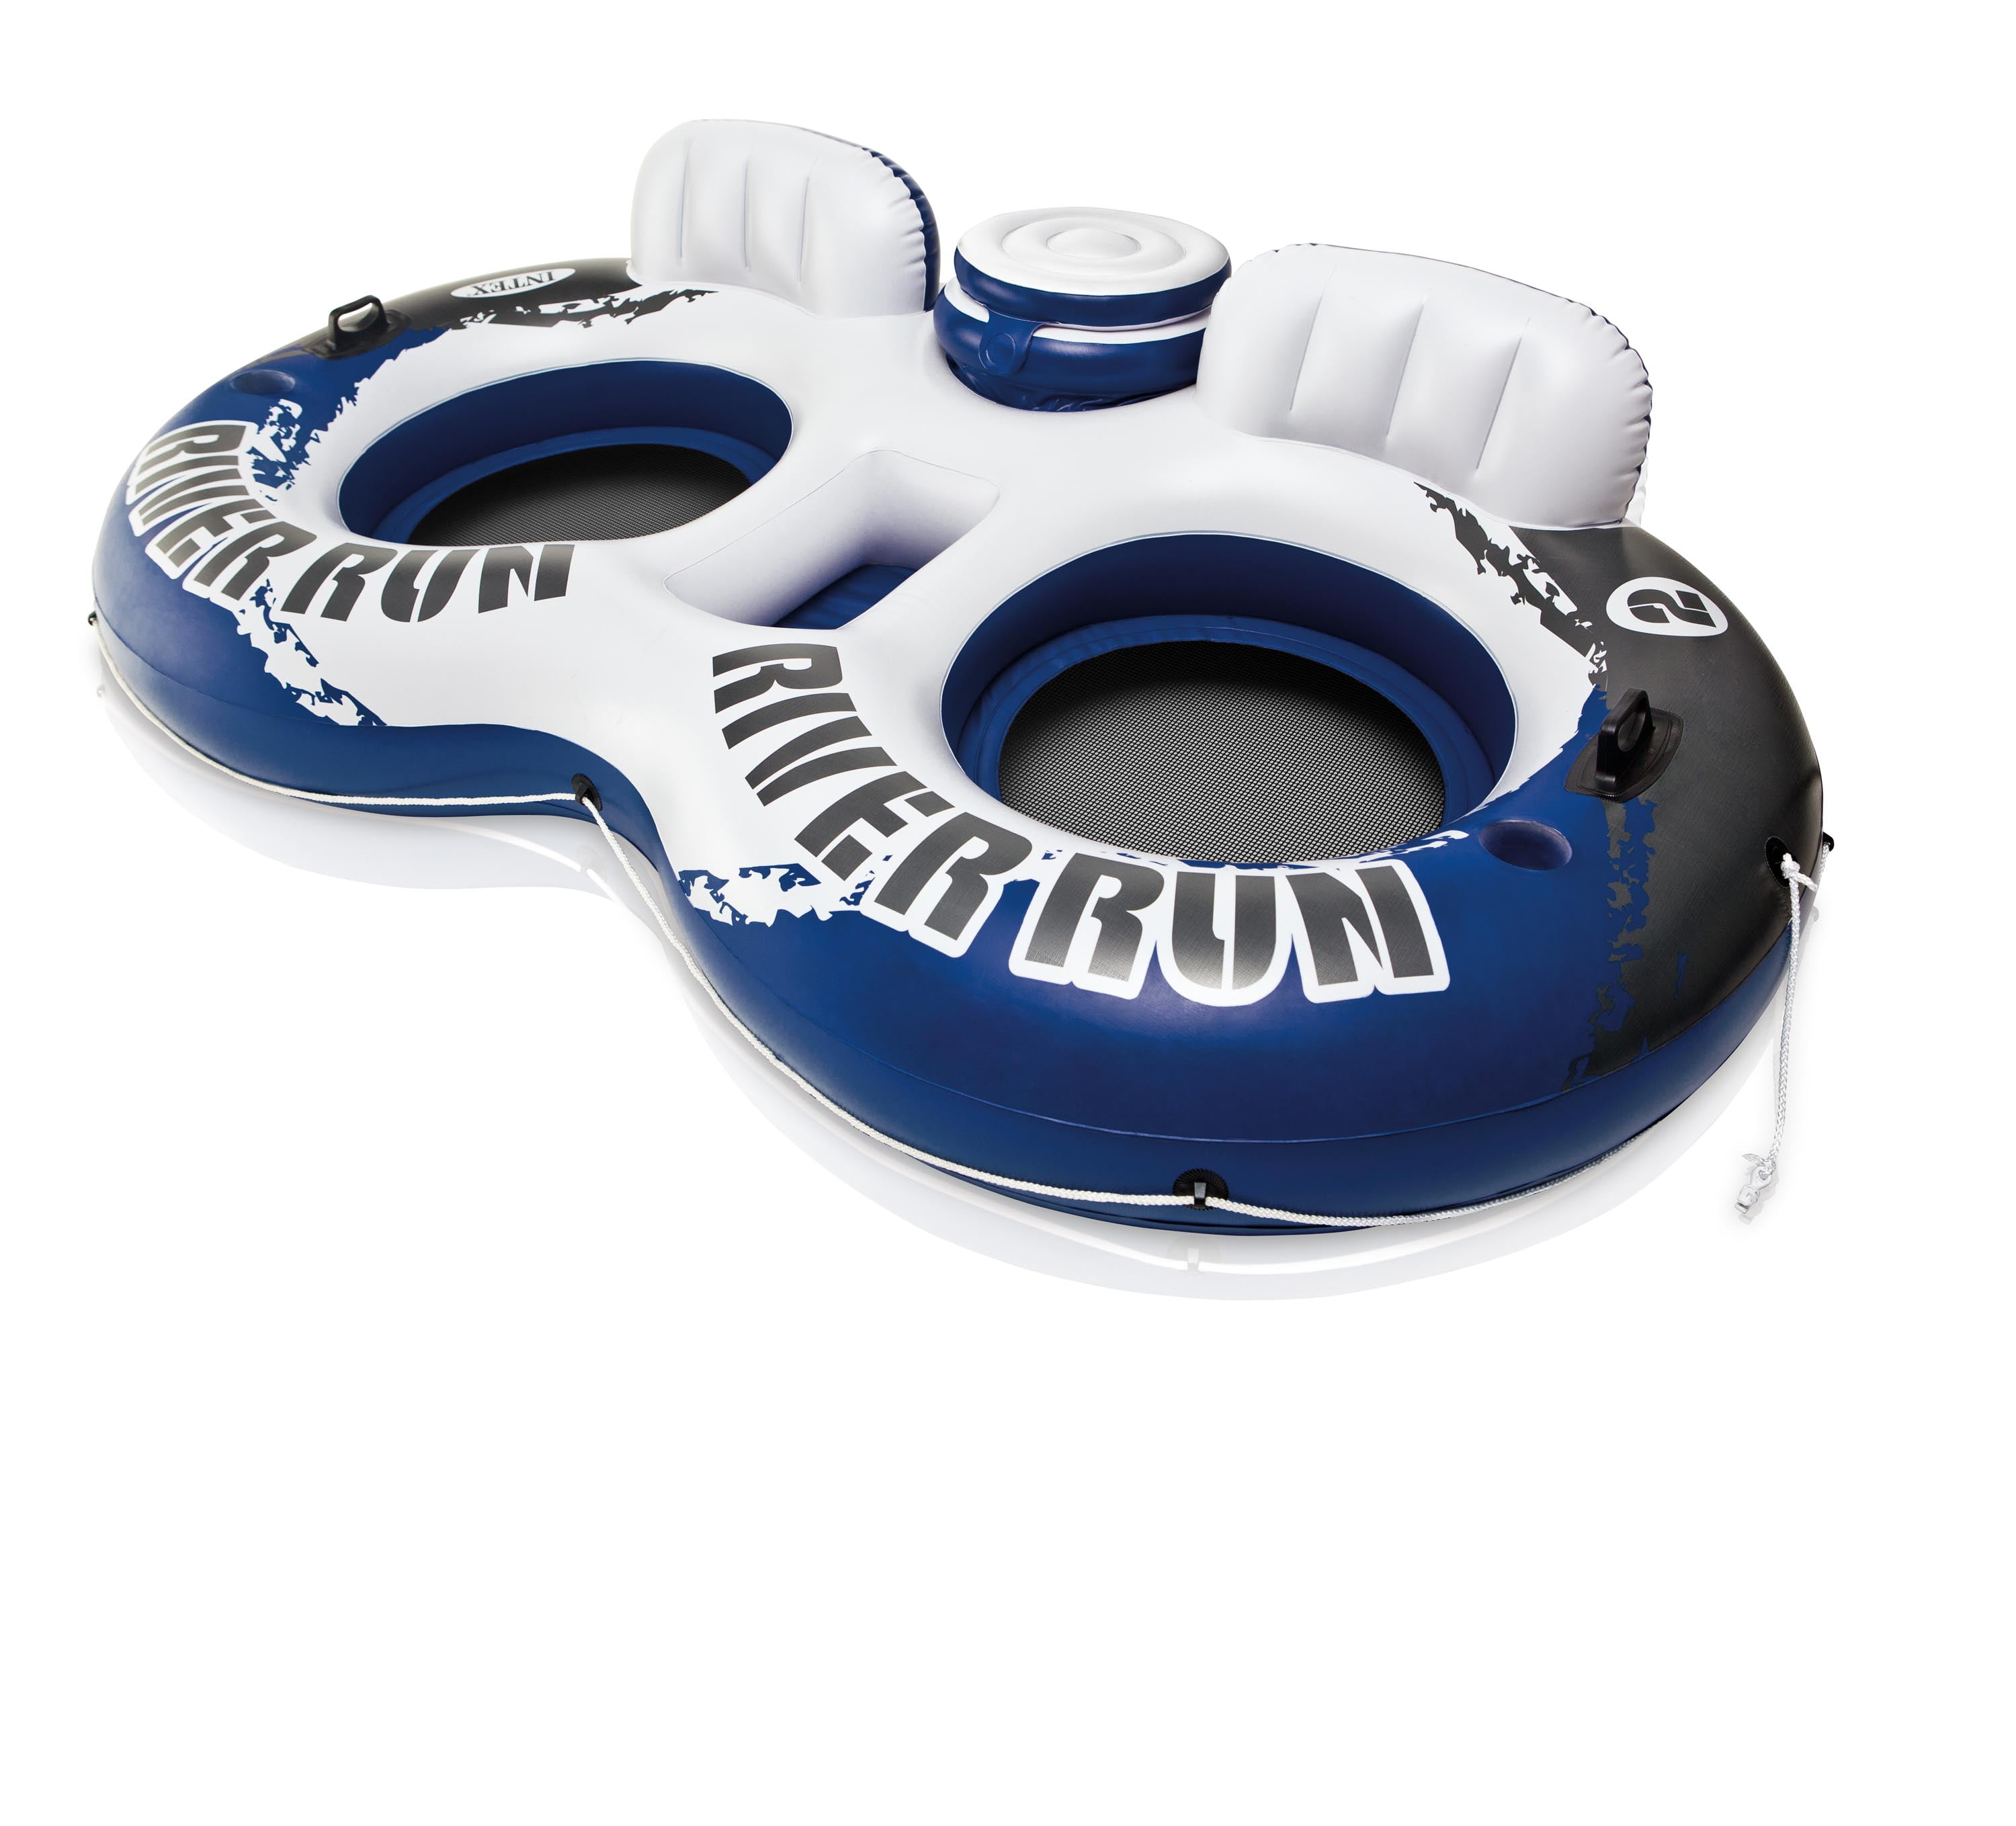 Intex River Run 1 Inflatable Floating Tube RaftOpen Box 4 